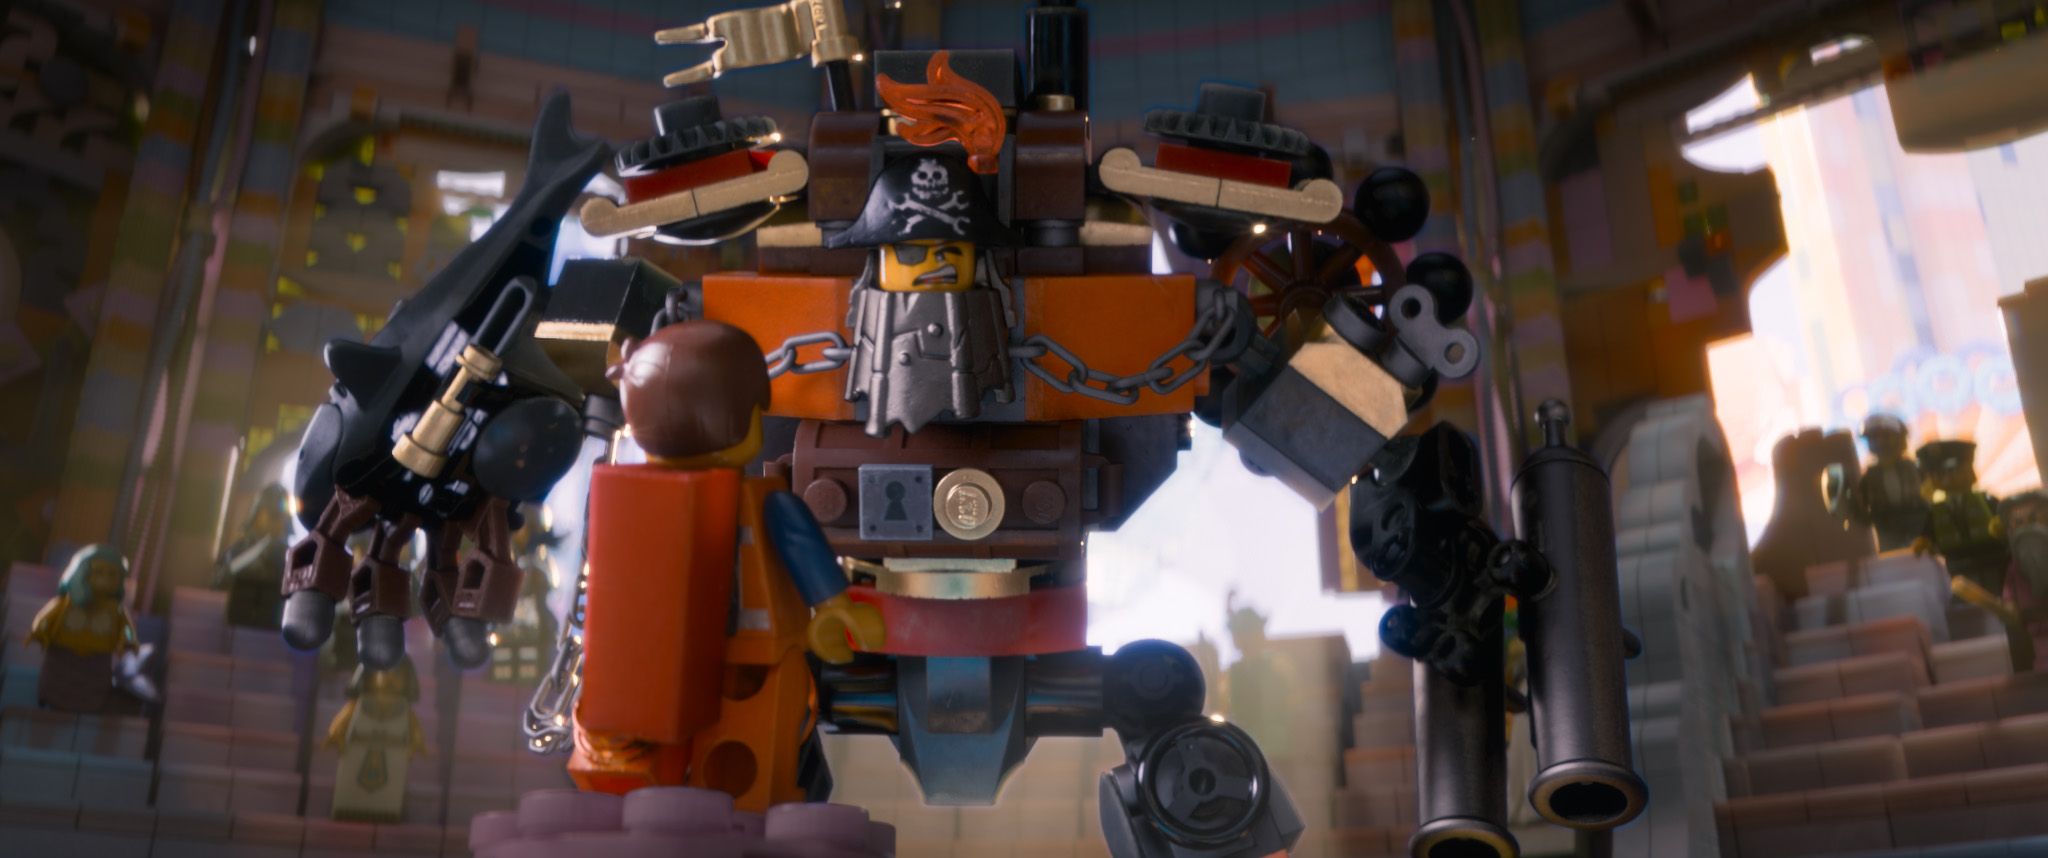 The Lego Movie Photo 5